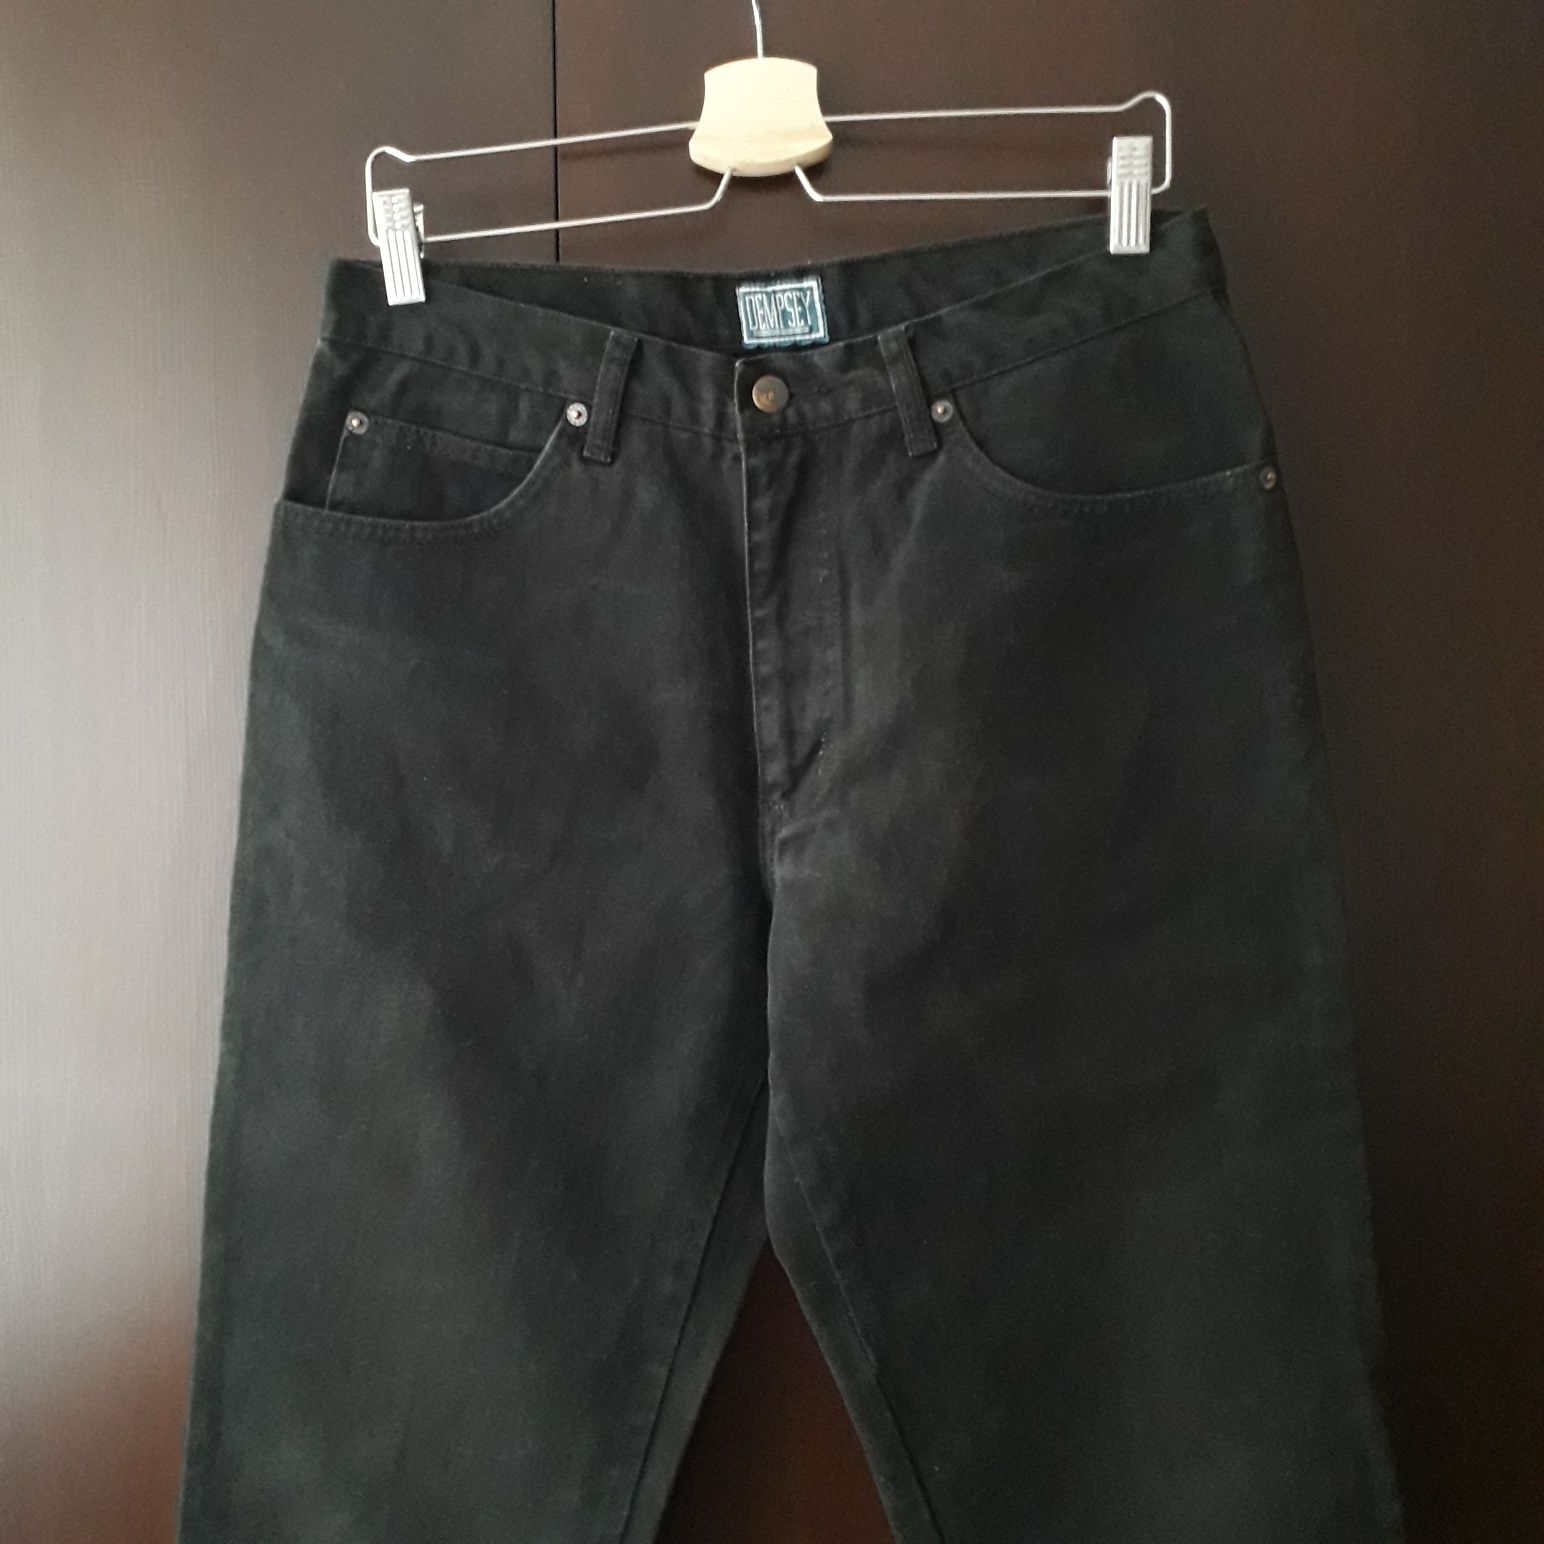 Jeansy czarne W33 L34 proste dempsey jeans